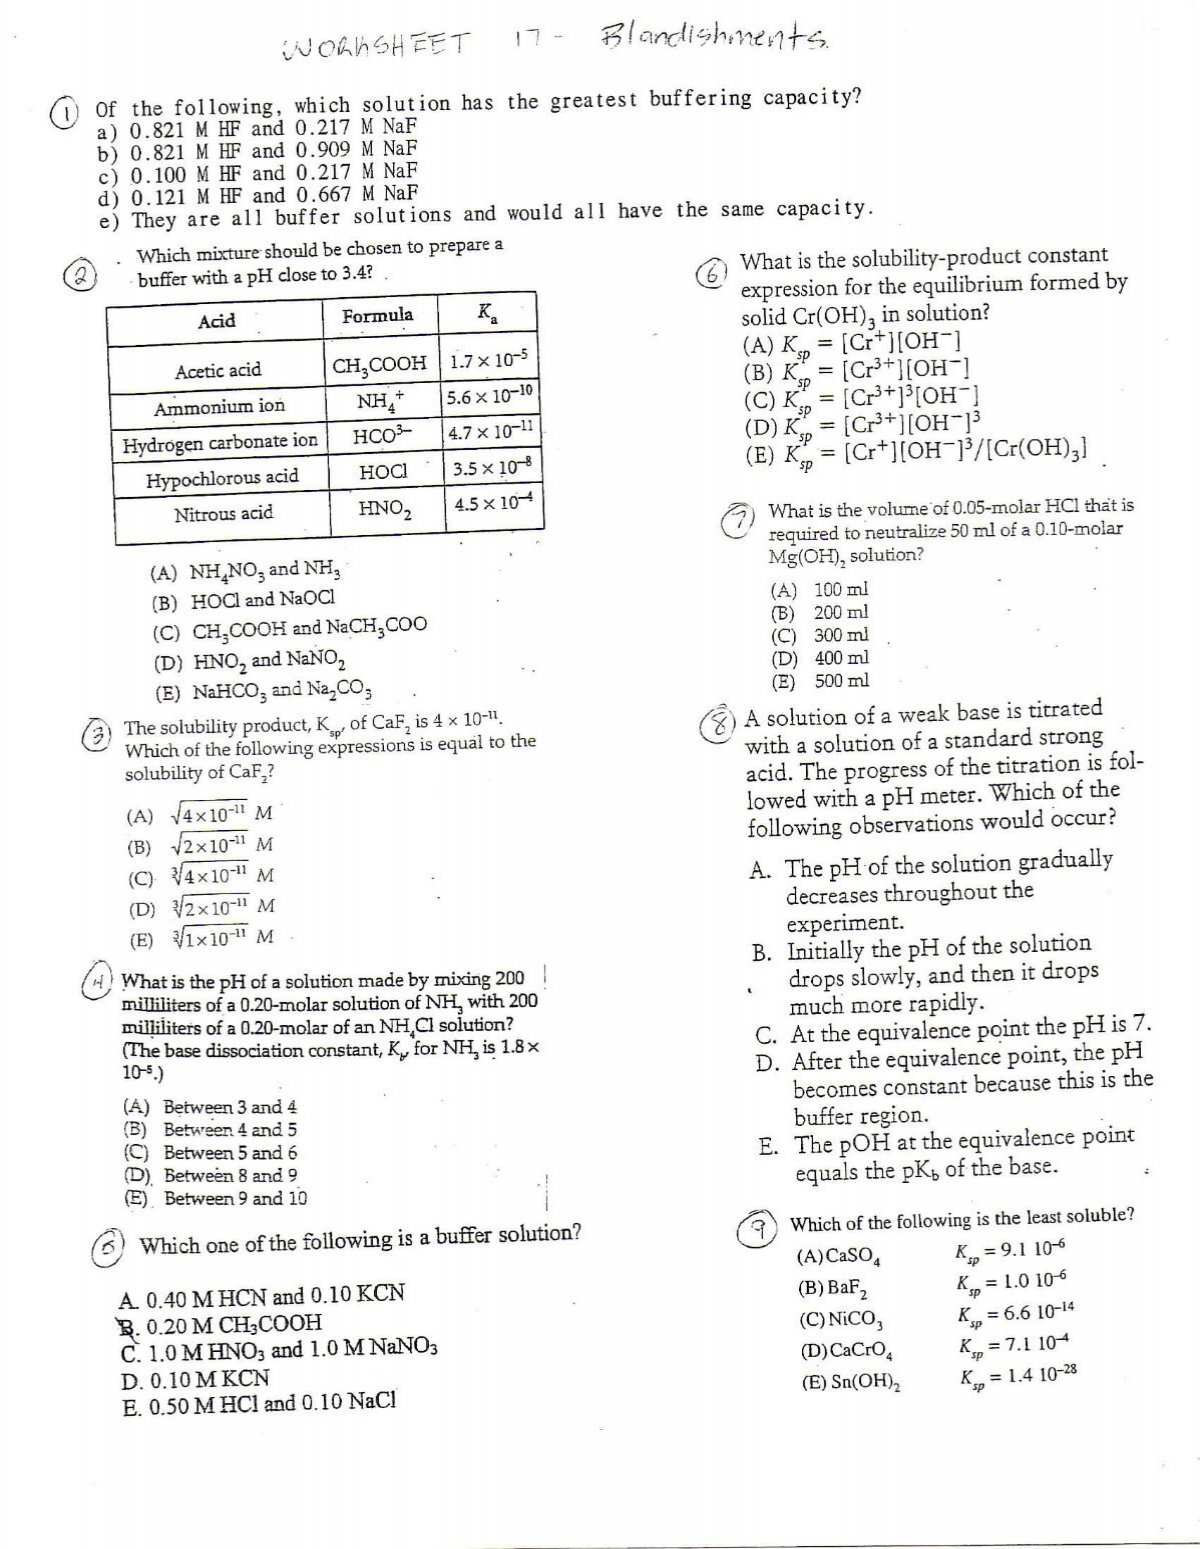 Worksheet 17 Blandishments